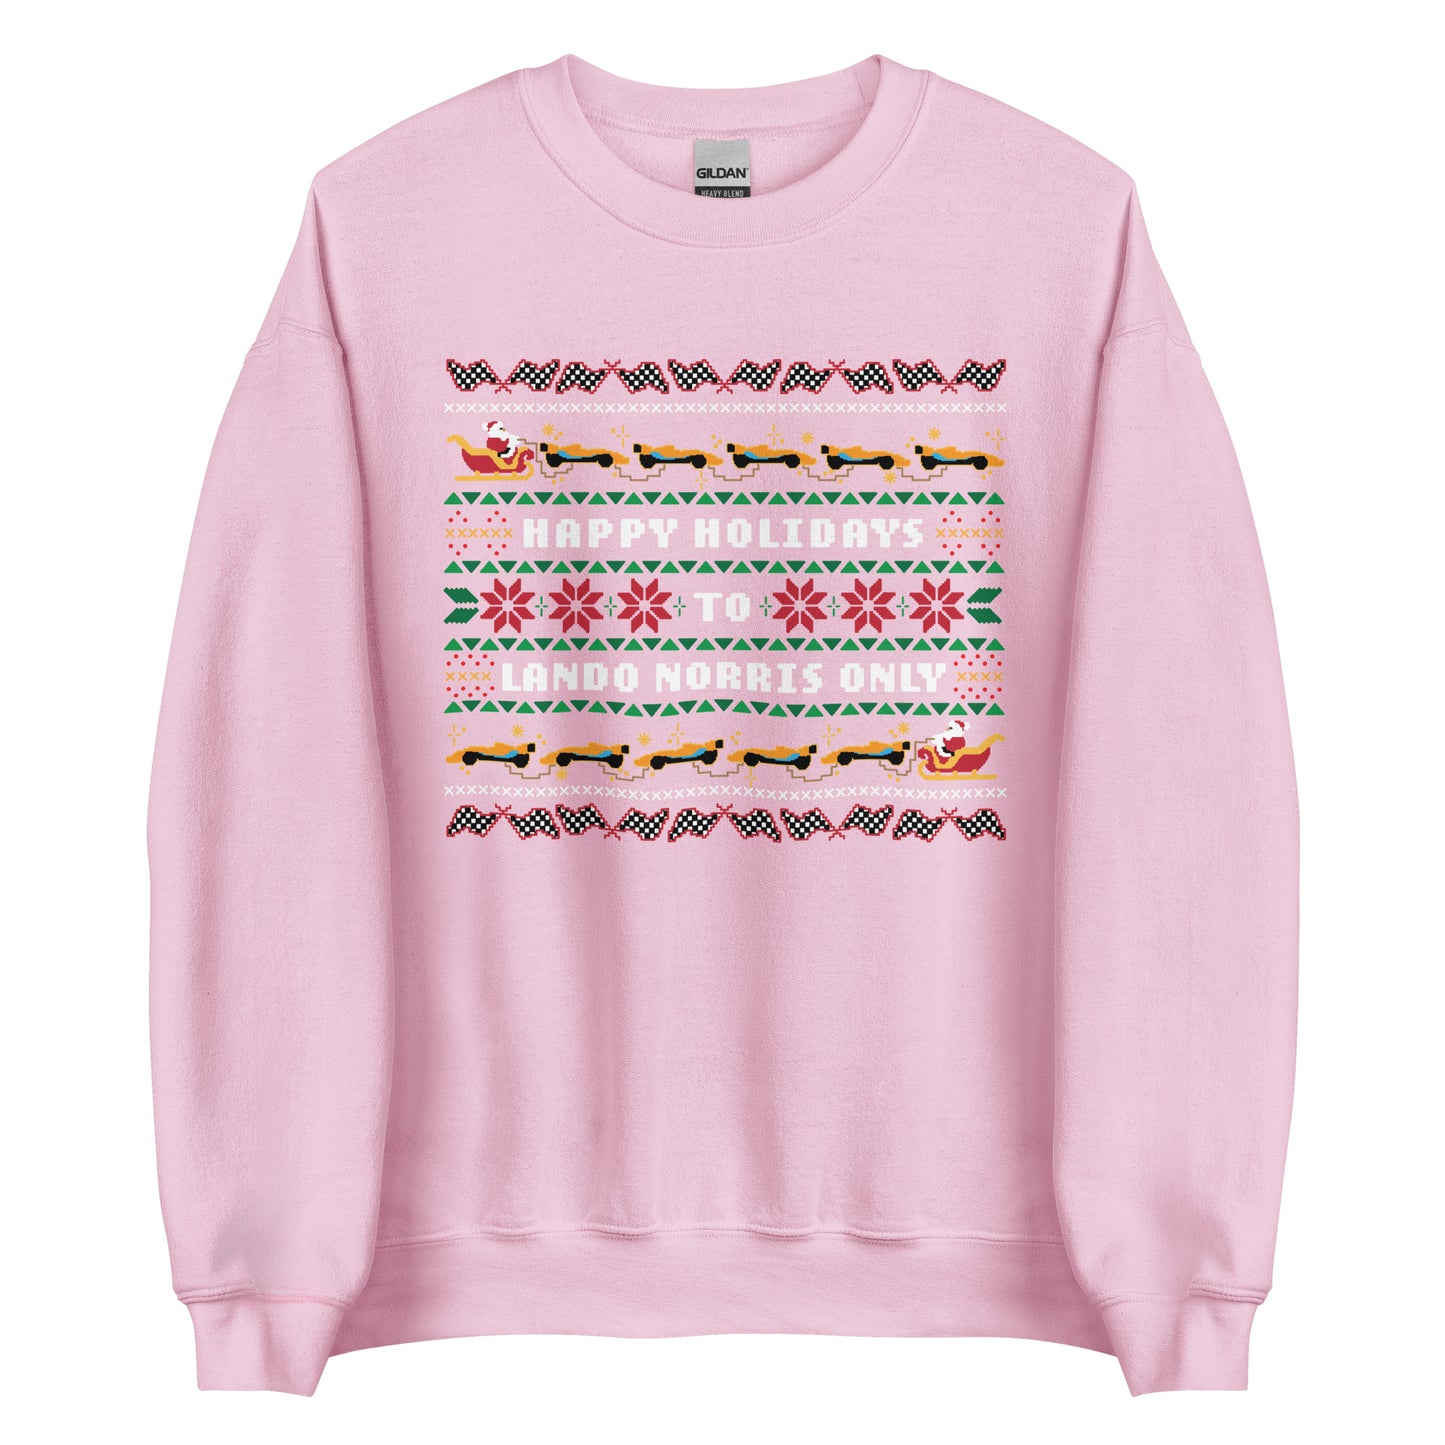 Lando Norris Holiday Sweater